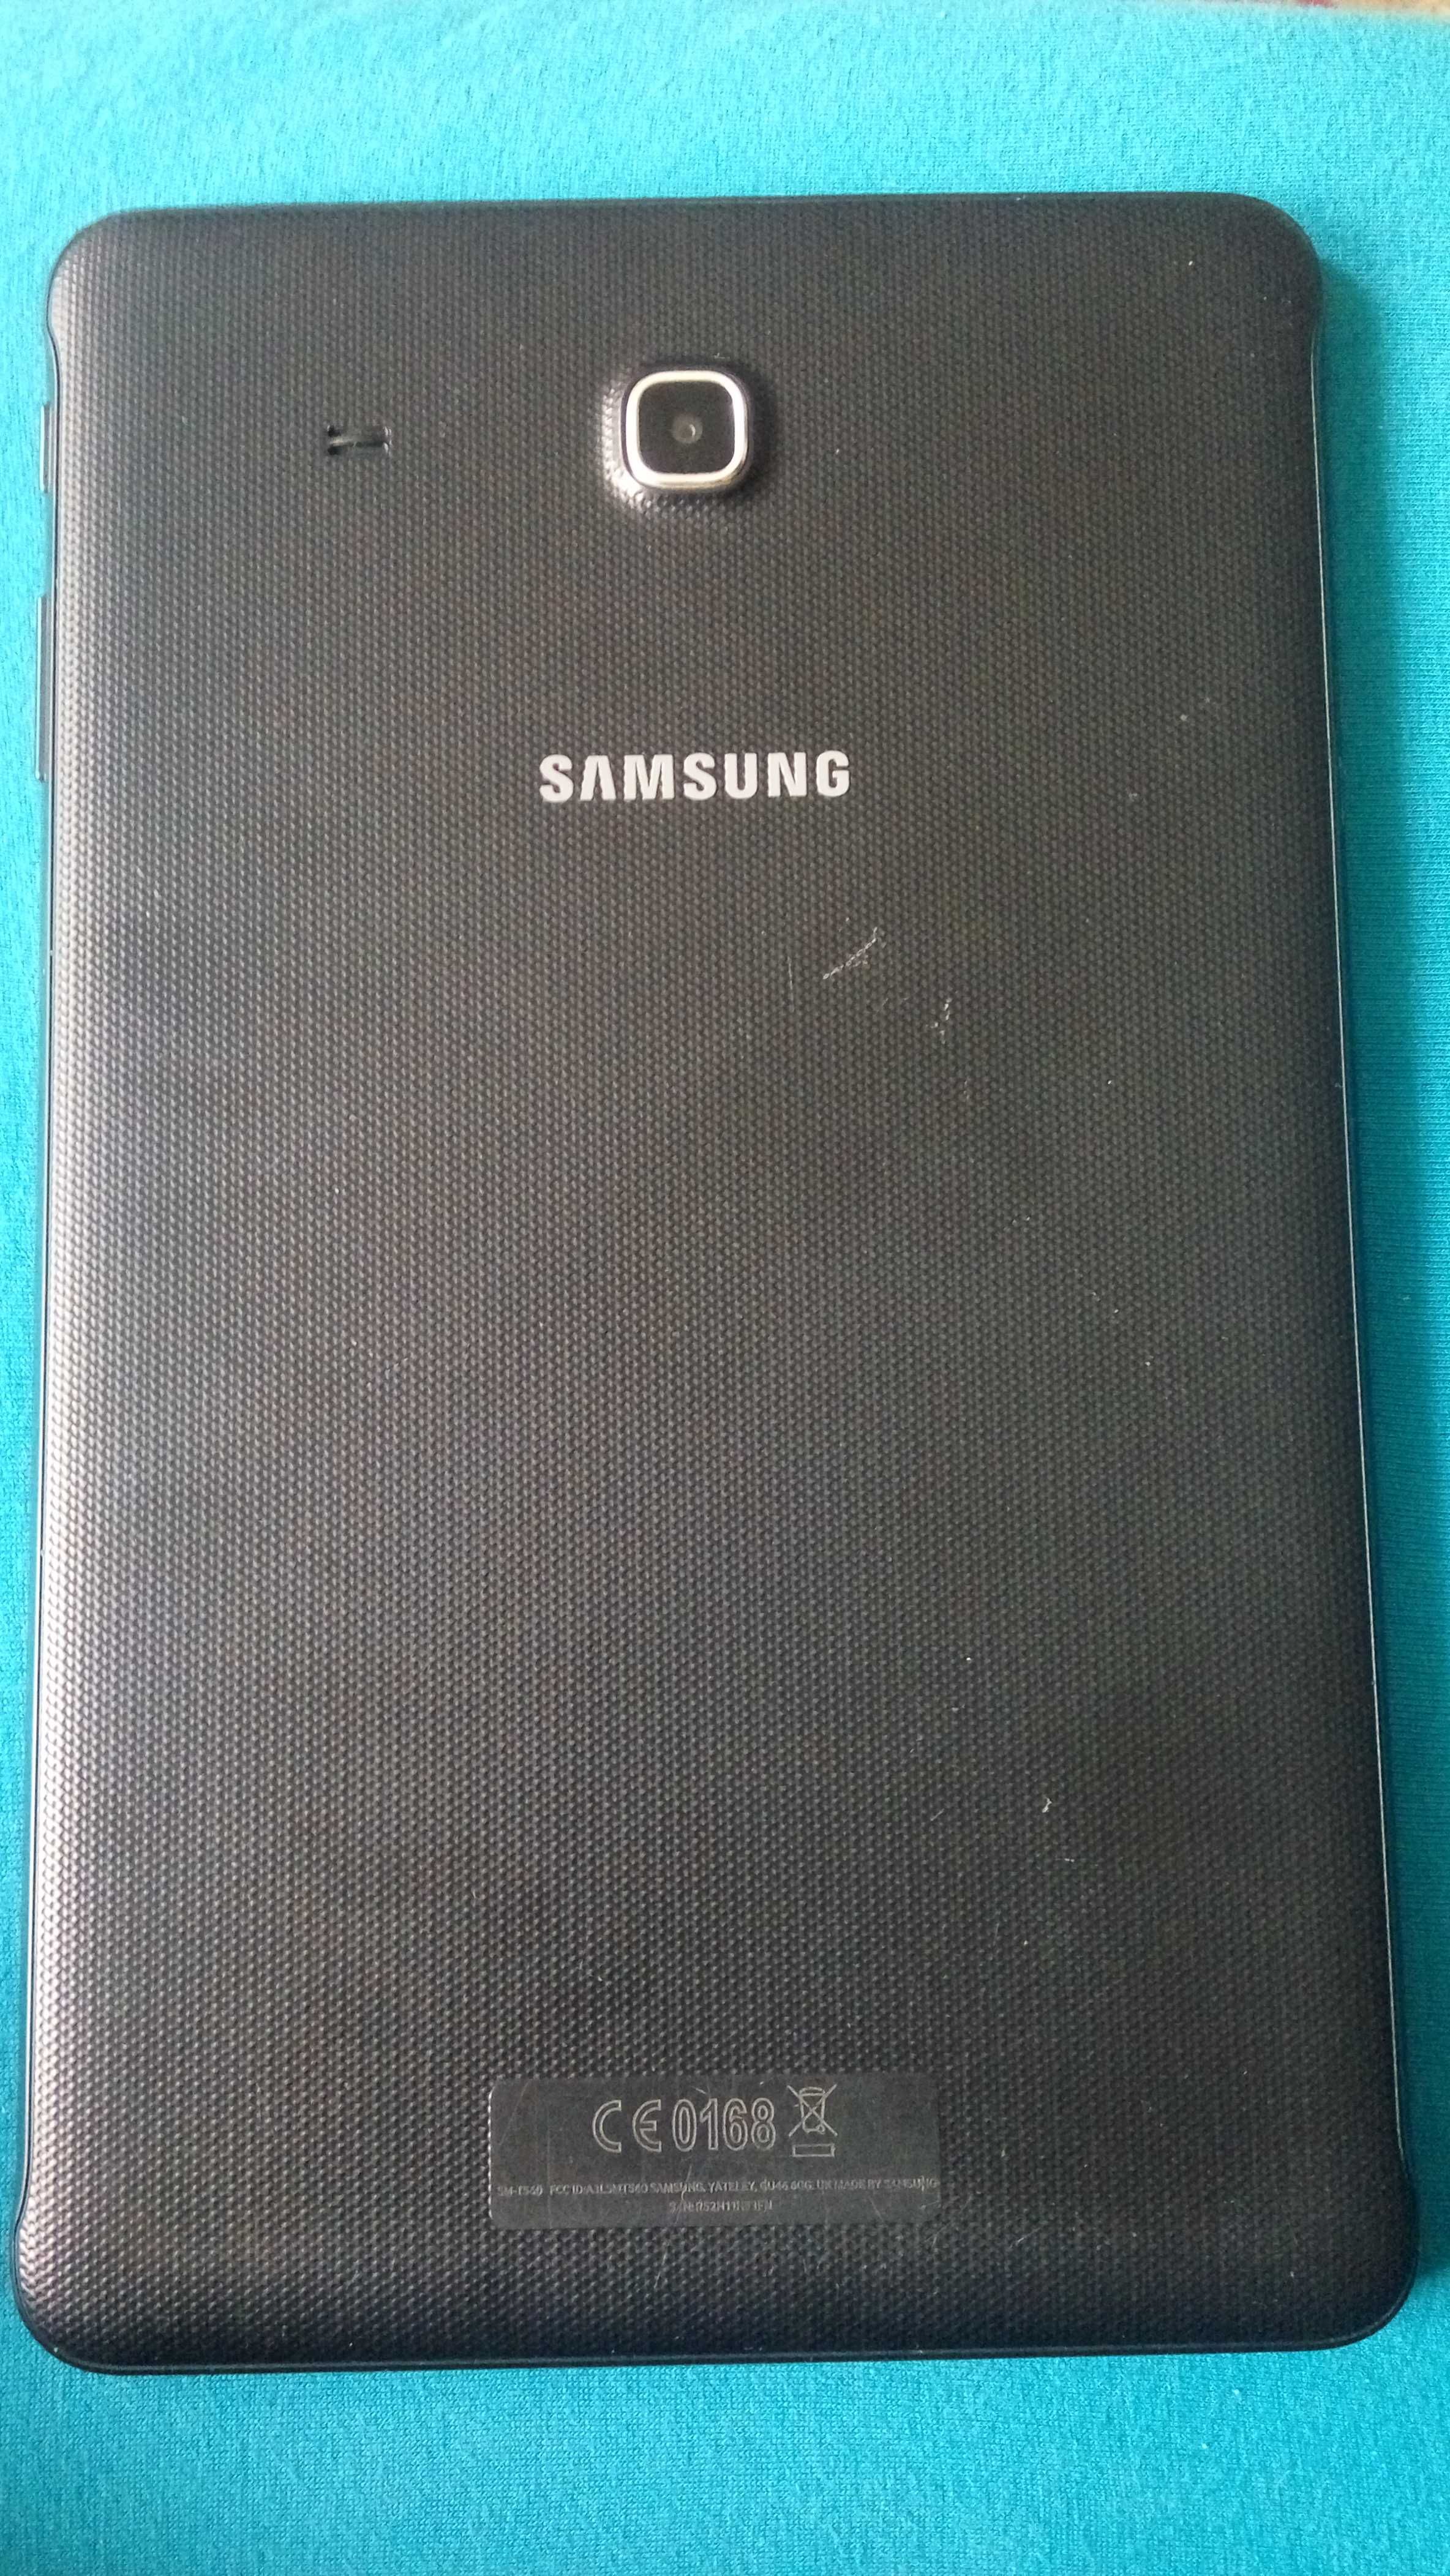 Планшет Samsung Galaxy Tab E 1500грн.